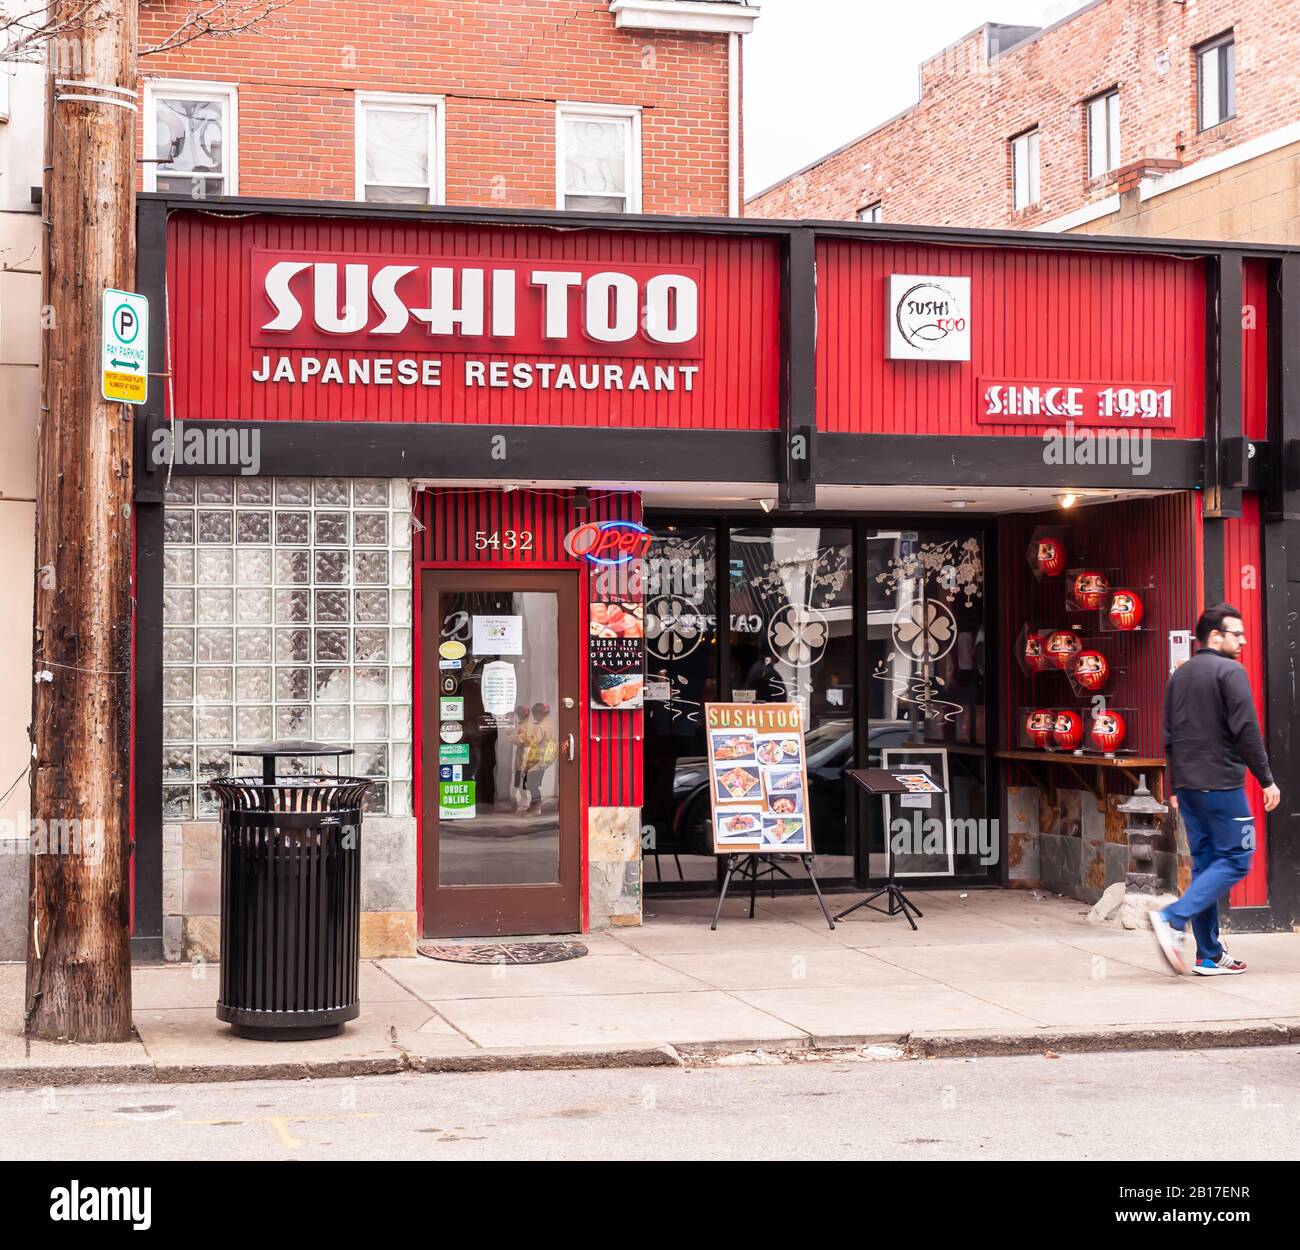 The Sushi Too Japanese restaurant on Walnut Street in the Shadyside neighborhood, Pittsburgh, Pennsylvania, USA Stock Photo